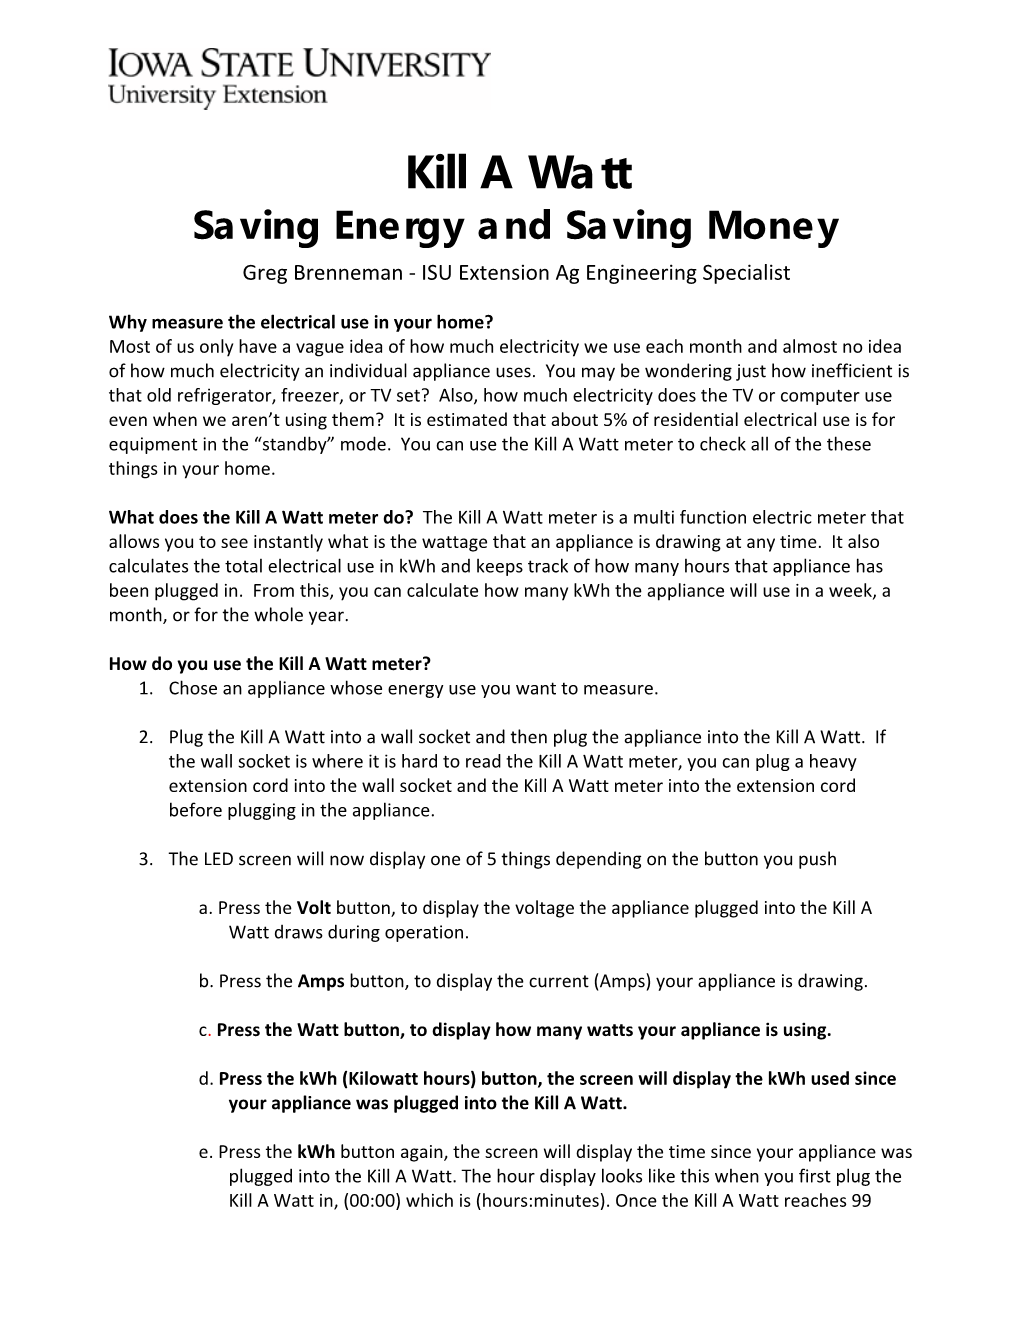 Kill a Watt Saving Energy and Saving Money Greg Brenneman ‐ ISU Extension Ag Engineering Specialist